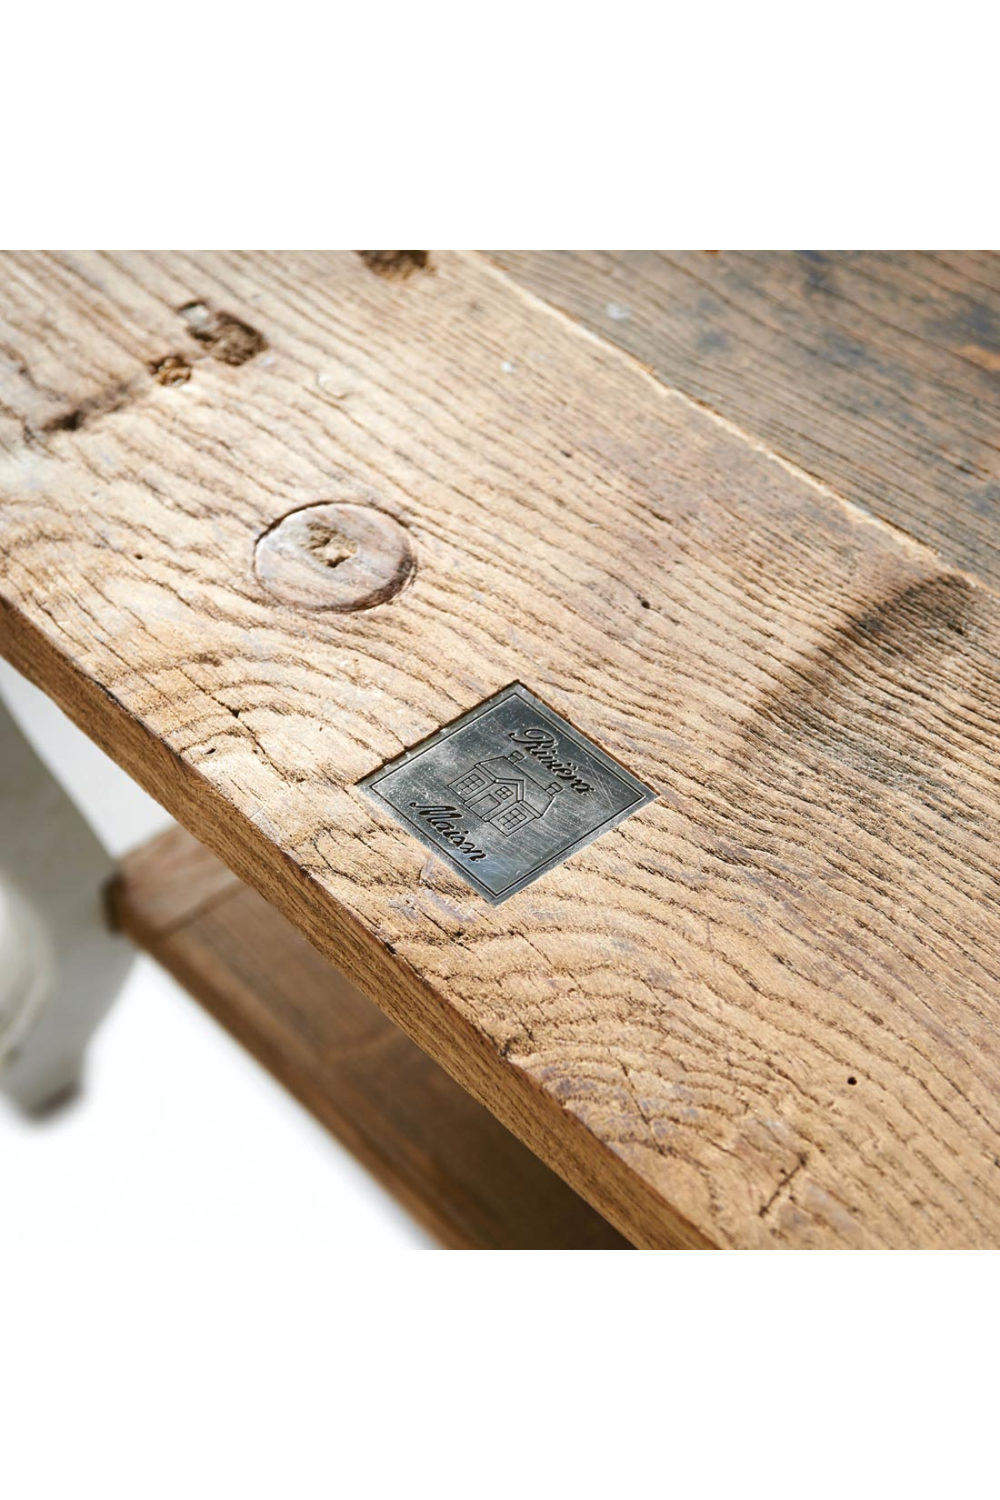 Square Classic Coffee Table | Rivièra Maison Driftwood | Woodfurniture.com